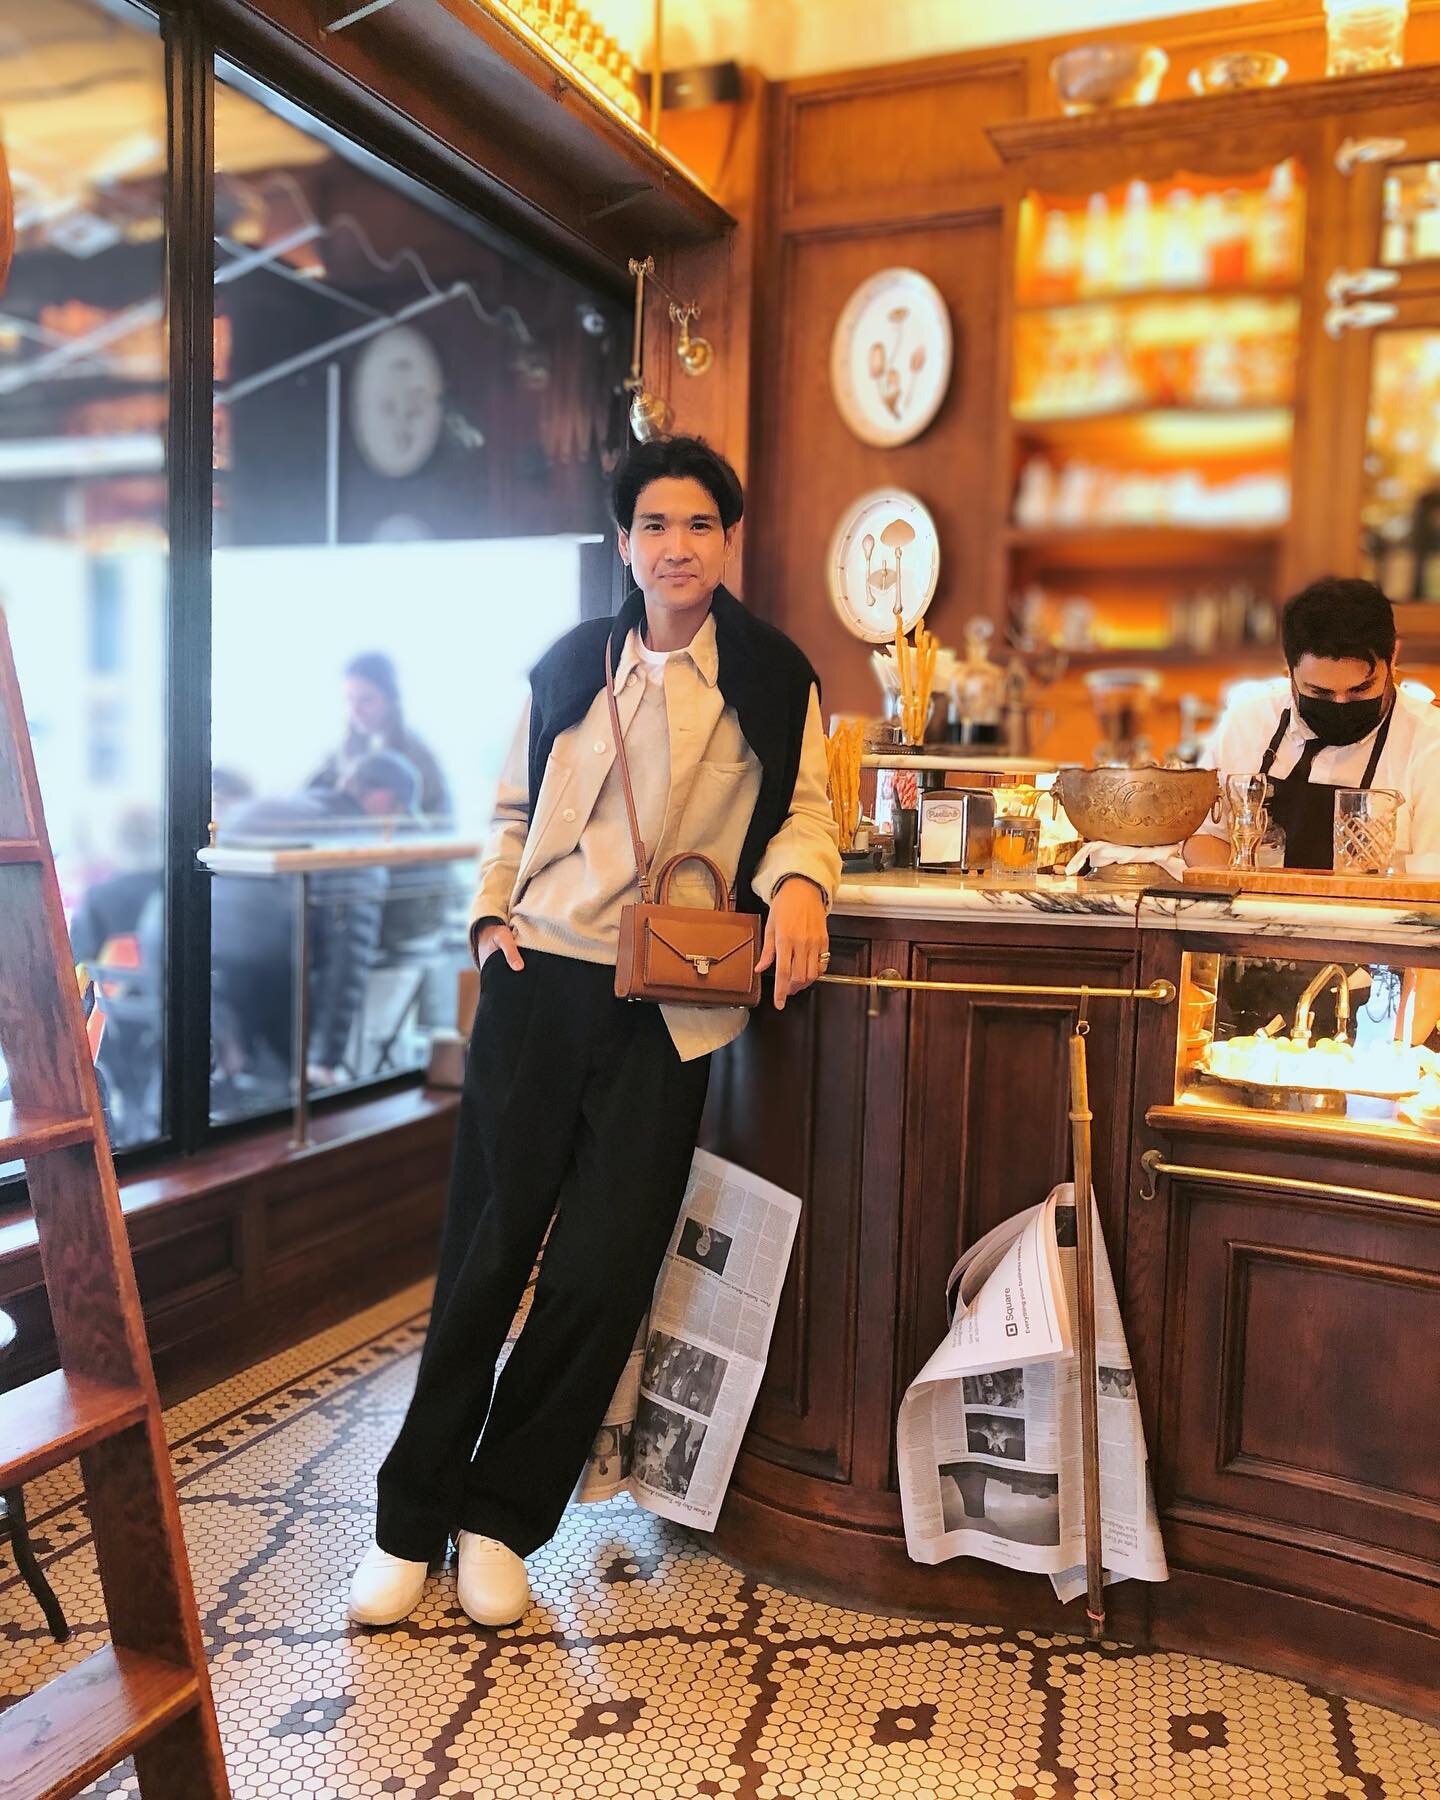 #canitellyou una cappuccino per favore. Chef @woldykusina wearing the #julliancrossbodybag in cognac at @barpisellino. 
📸 : @livingstonjenny / 😉👜☕️
.
.
.
#woldyskusina #rafebag #barpisellino #mensstyle #mensbagstyle #unisexbag #minibagformen #smal